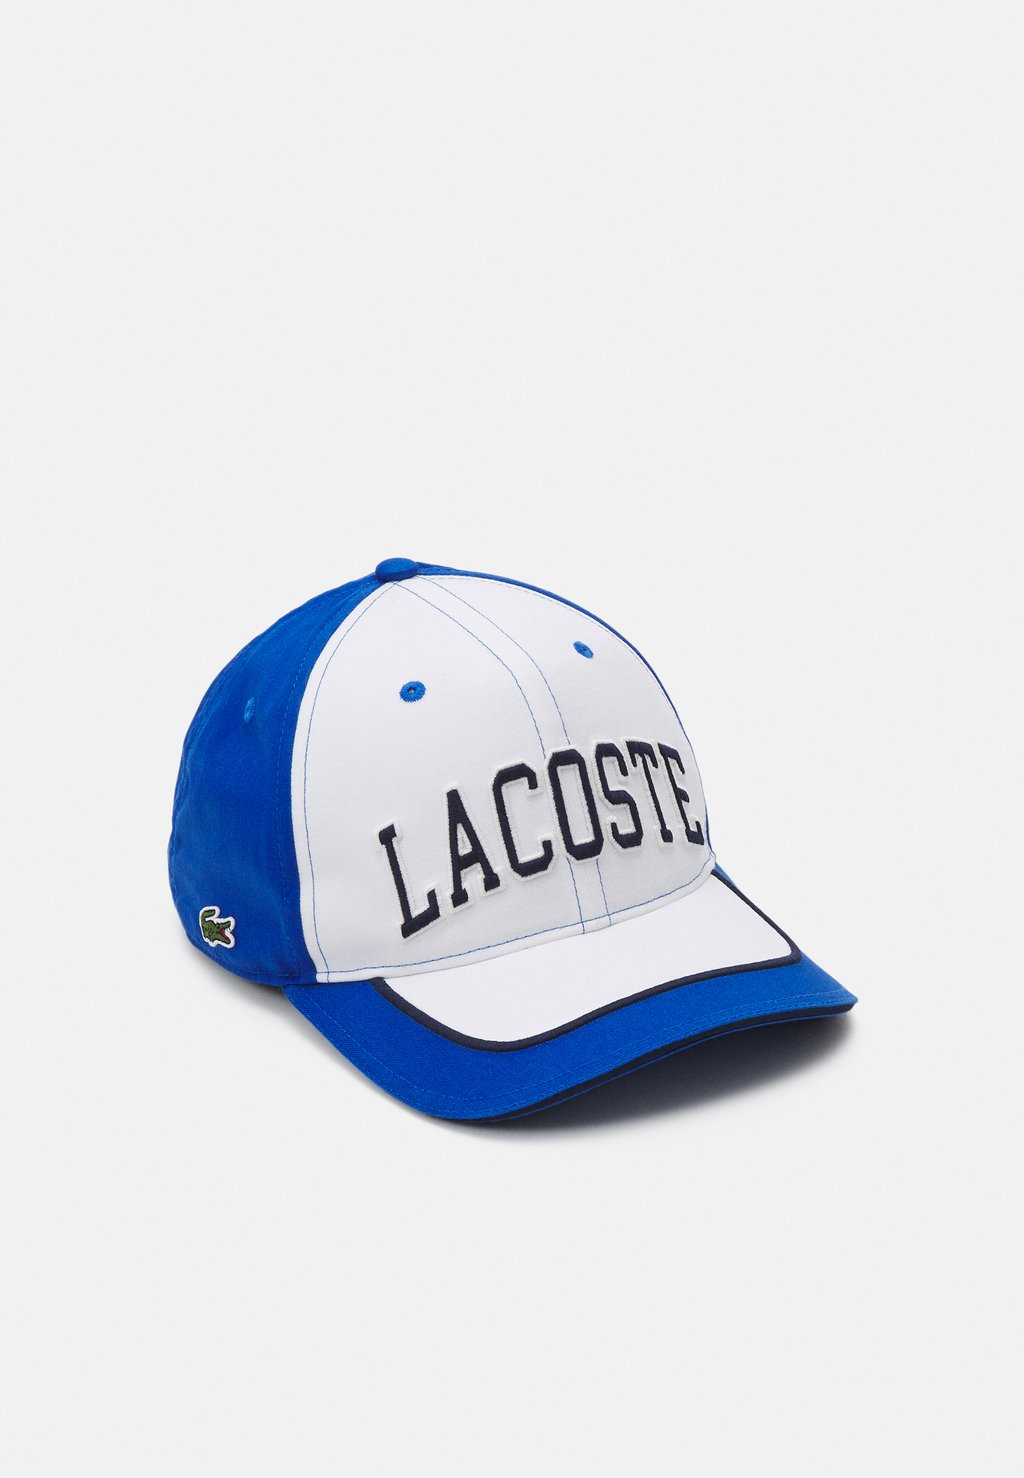 Бейсболка UNISEX Lacoste, цвет flour/ladigue/navy blue топ active training lacoste sport цвет navy blue ladigue